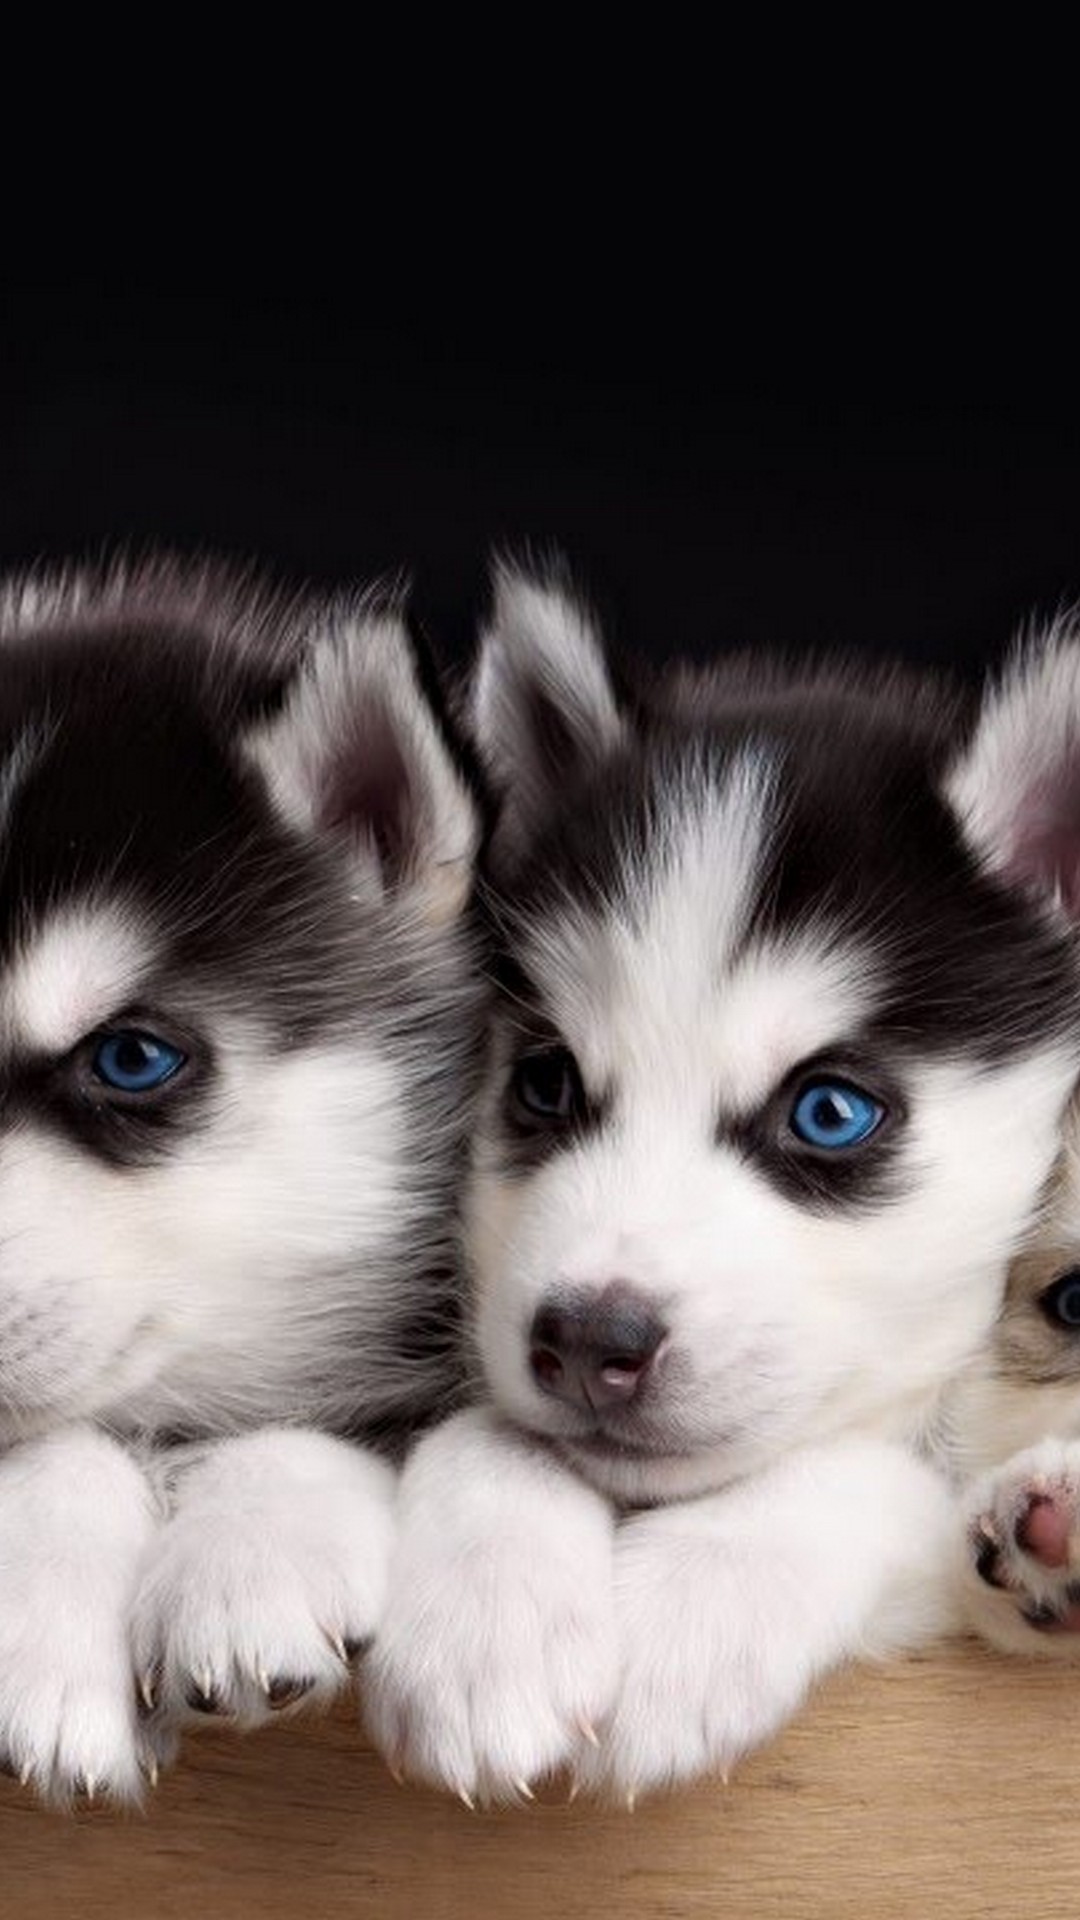 iPhone Wallpaper Cute Puppies resolution 1080x1920